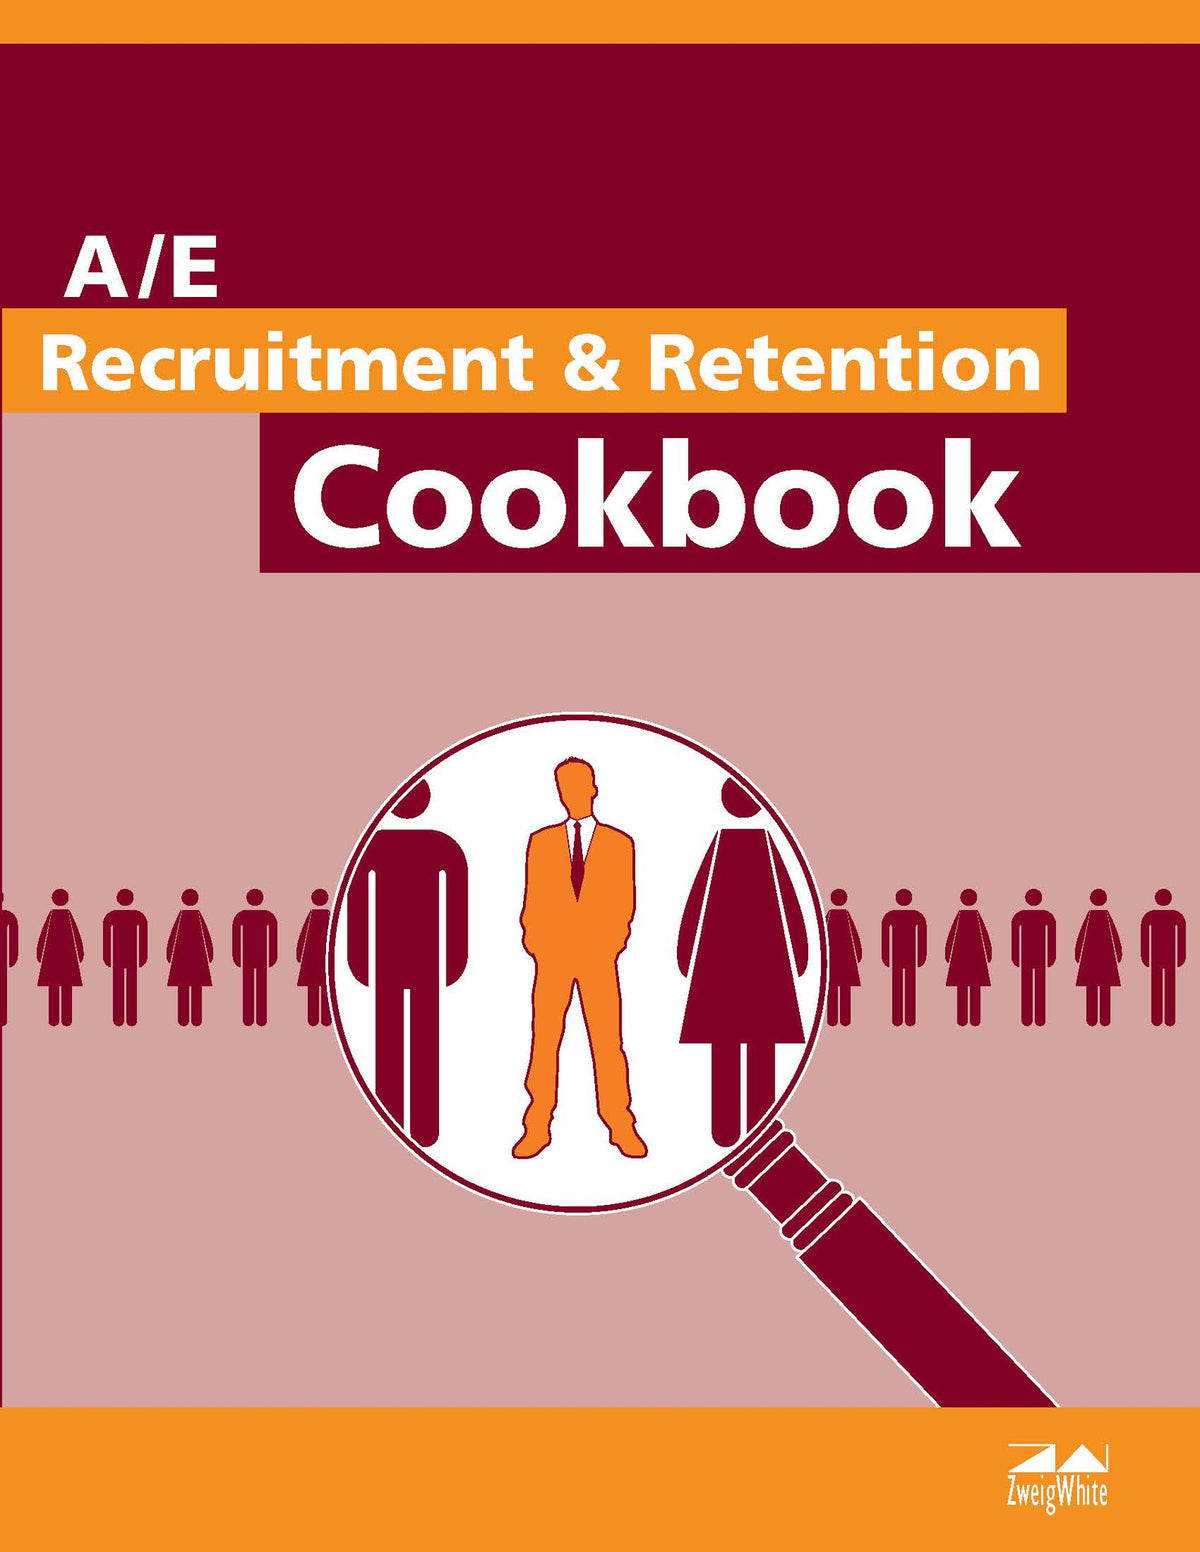 A/E Recruitment & Retention Cookbook Cover